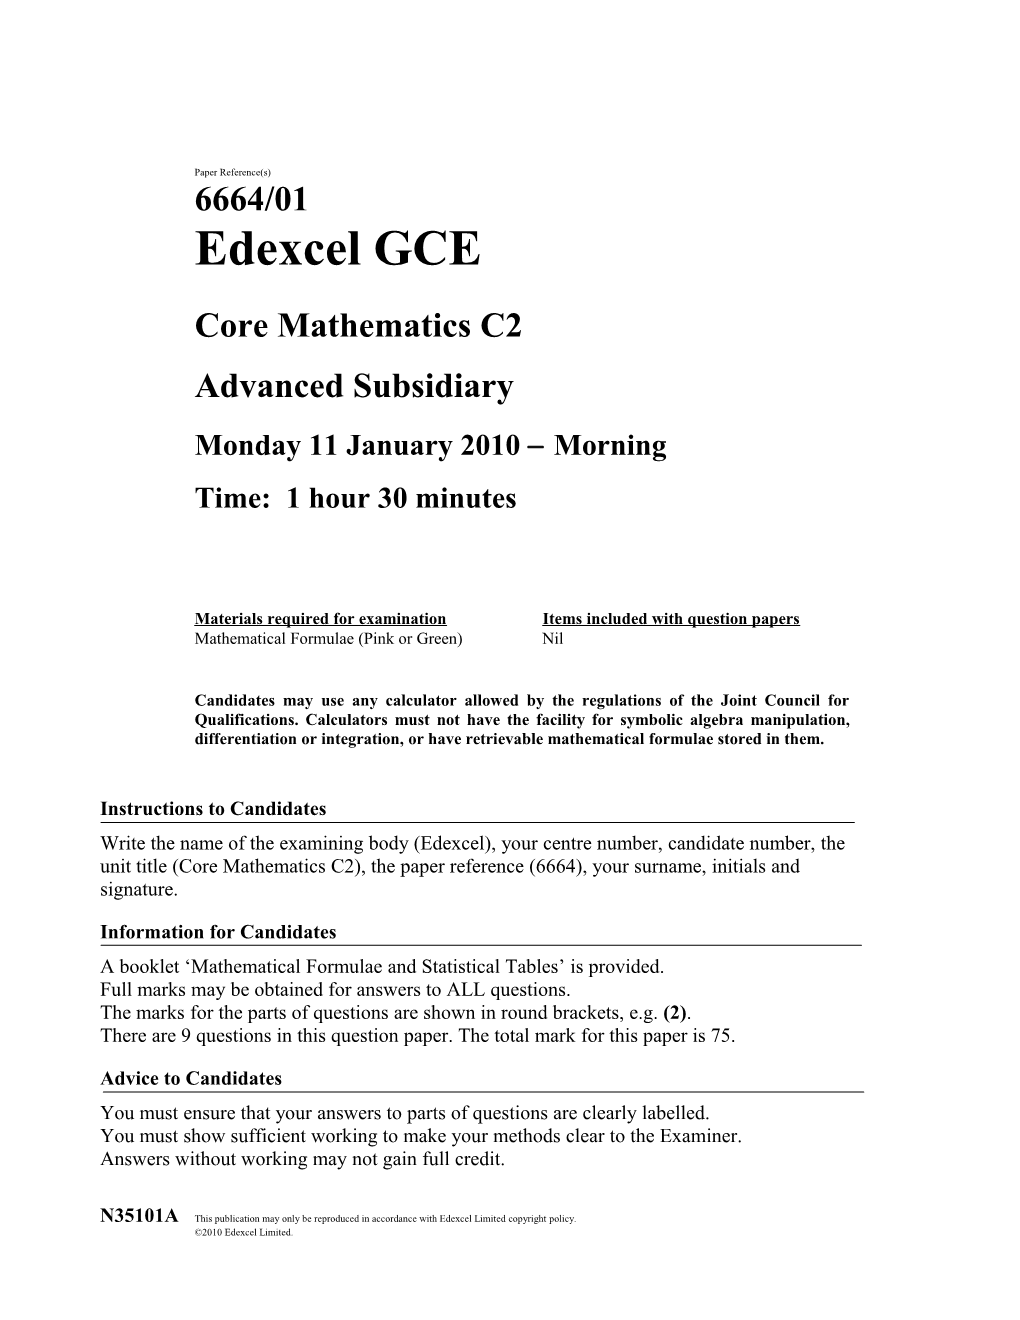 Core Mathematics C2 s1